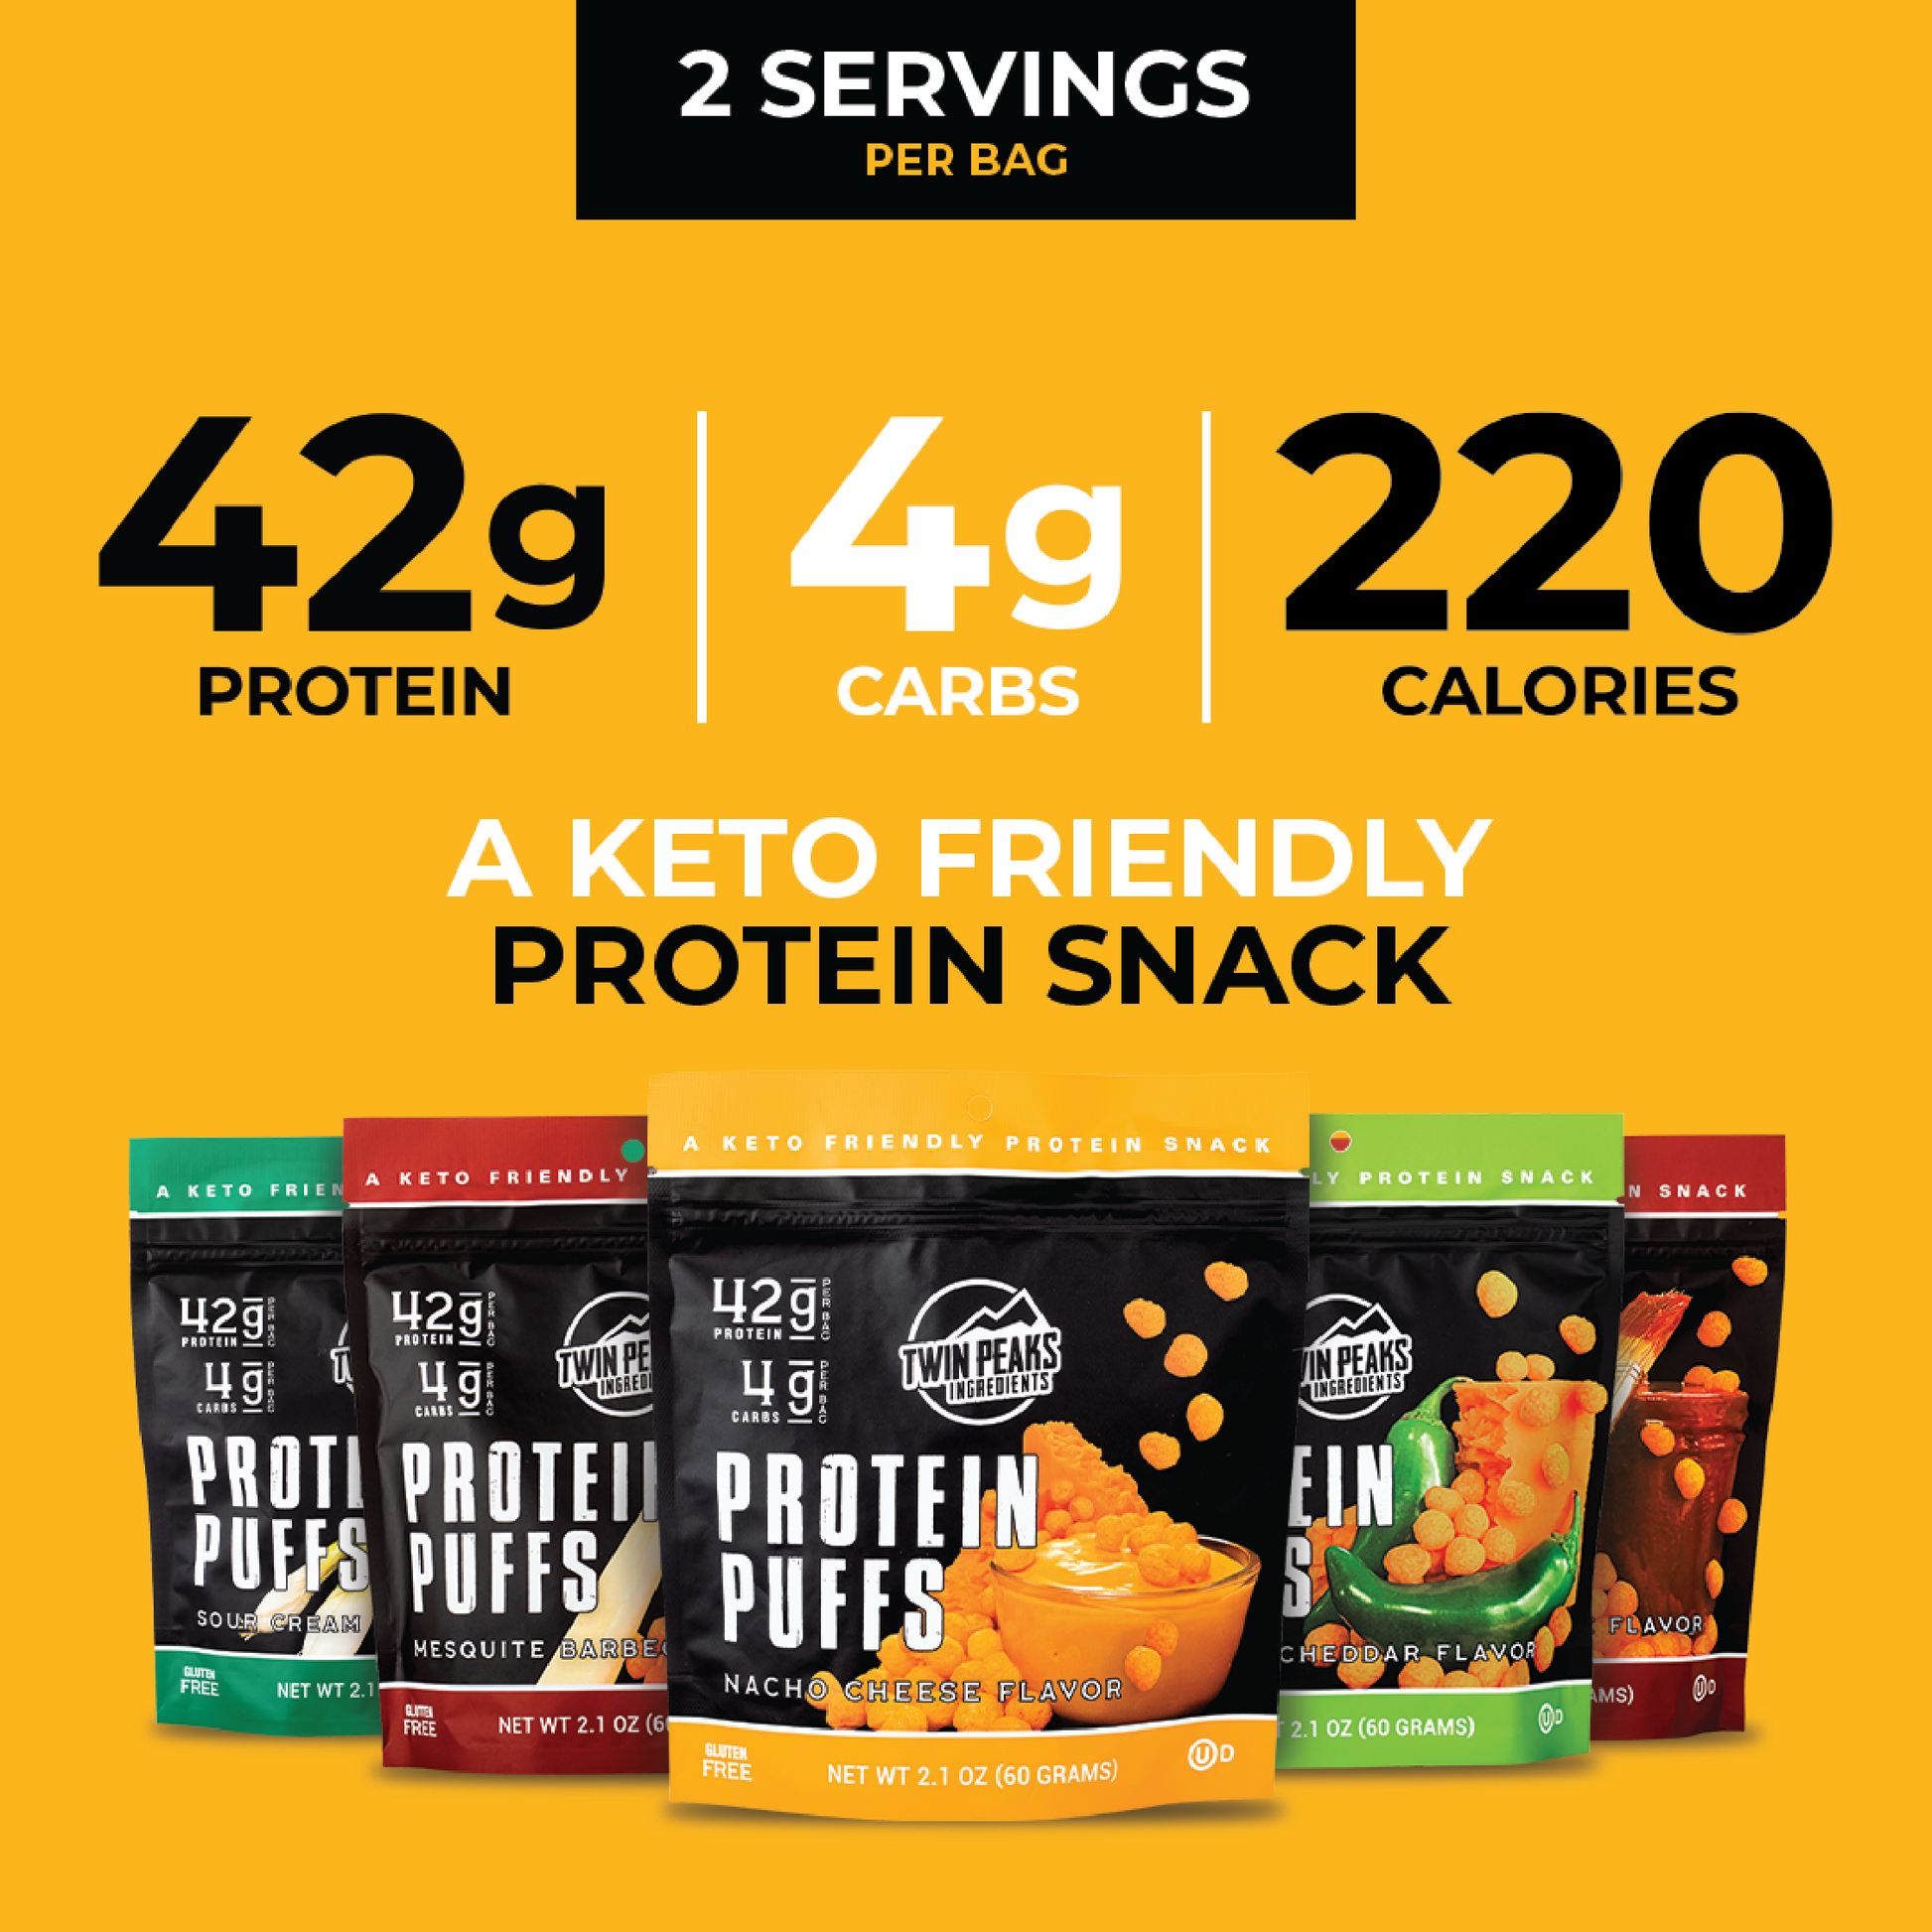 Macros - 42 grams protein, 4 grams carbs, 220 calories per bag